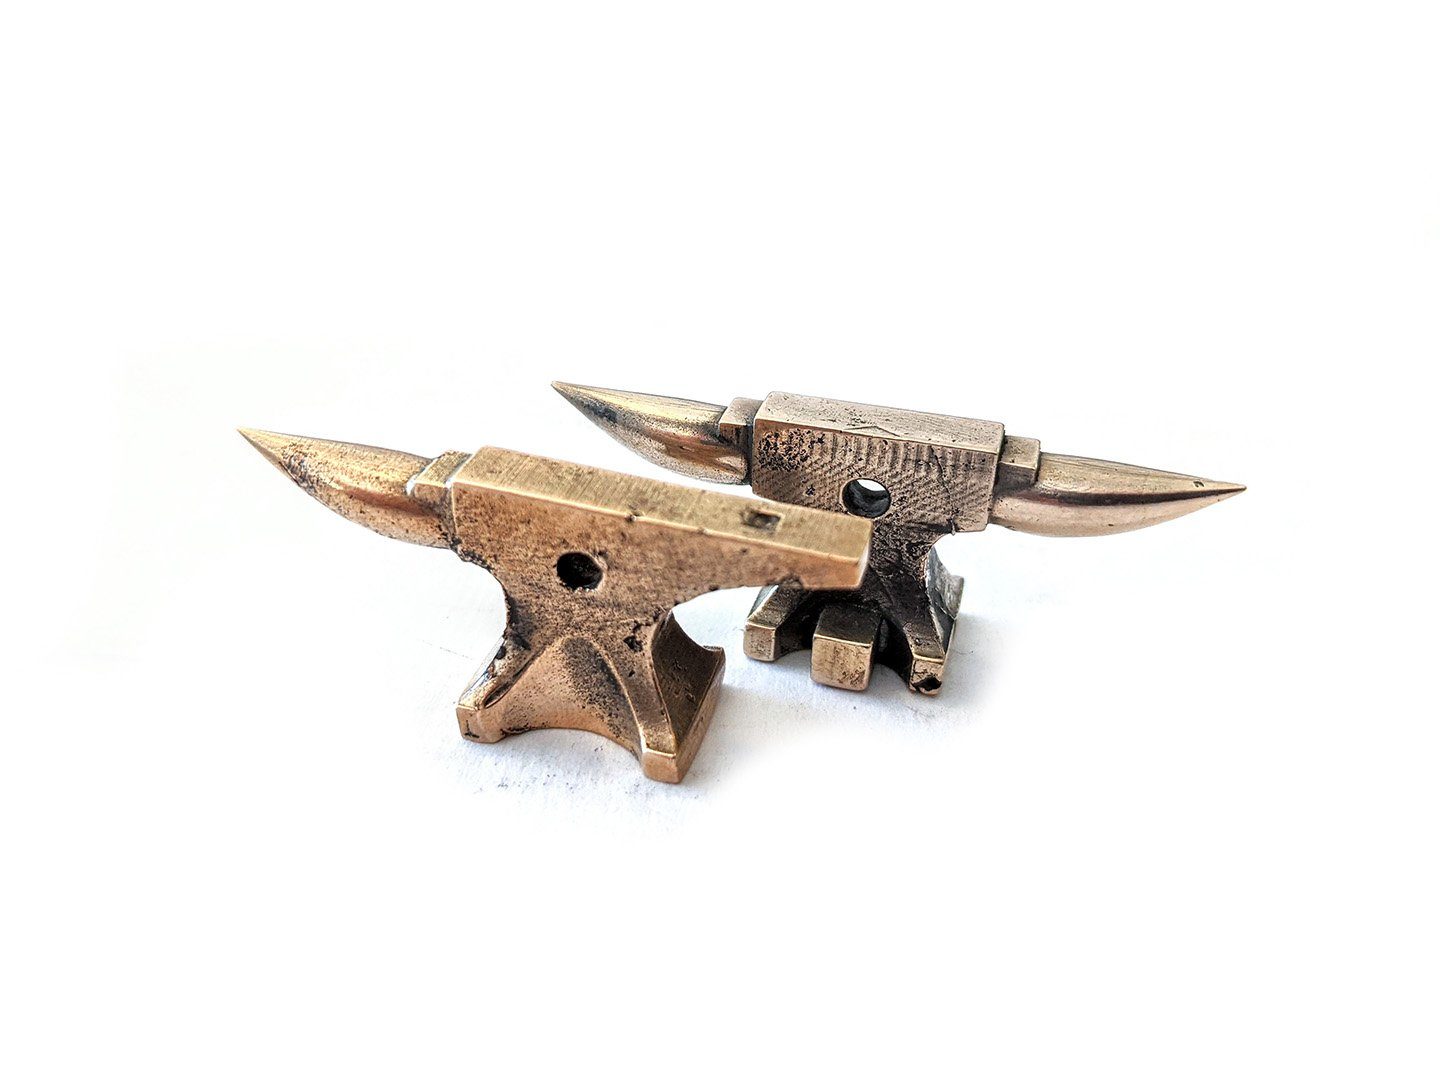 Miniature Anvil Bead/Pendant Bronze / Original (Single Horn/Heel)